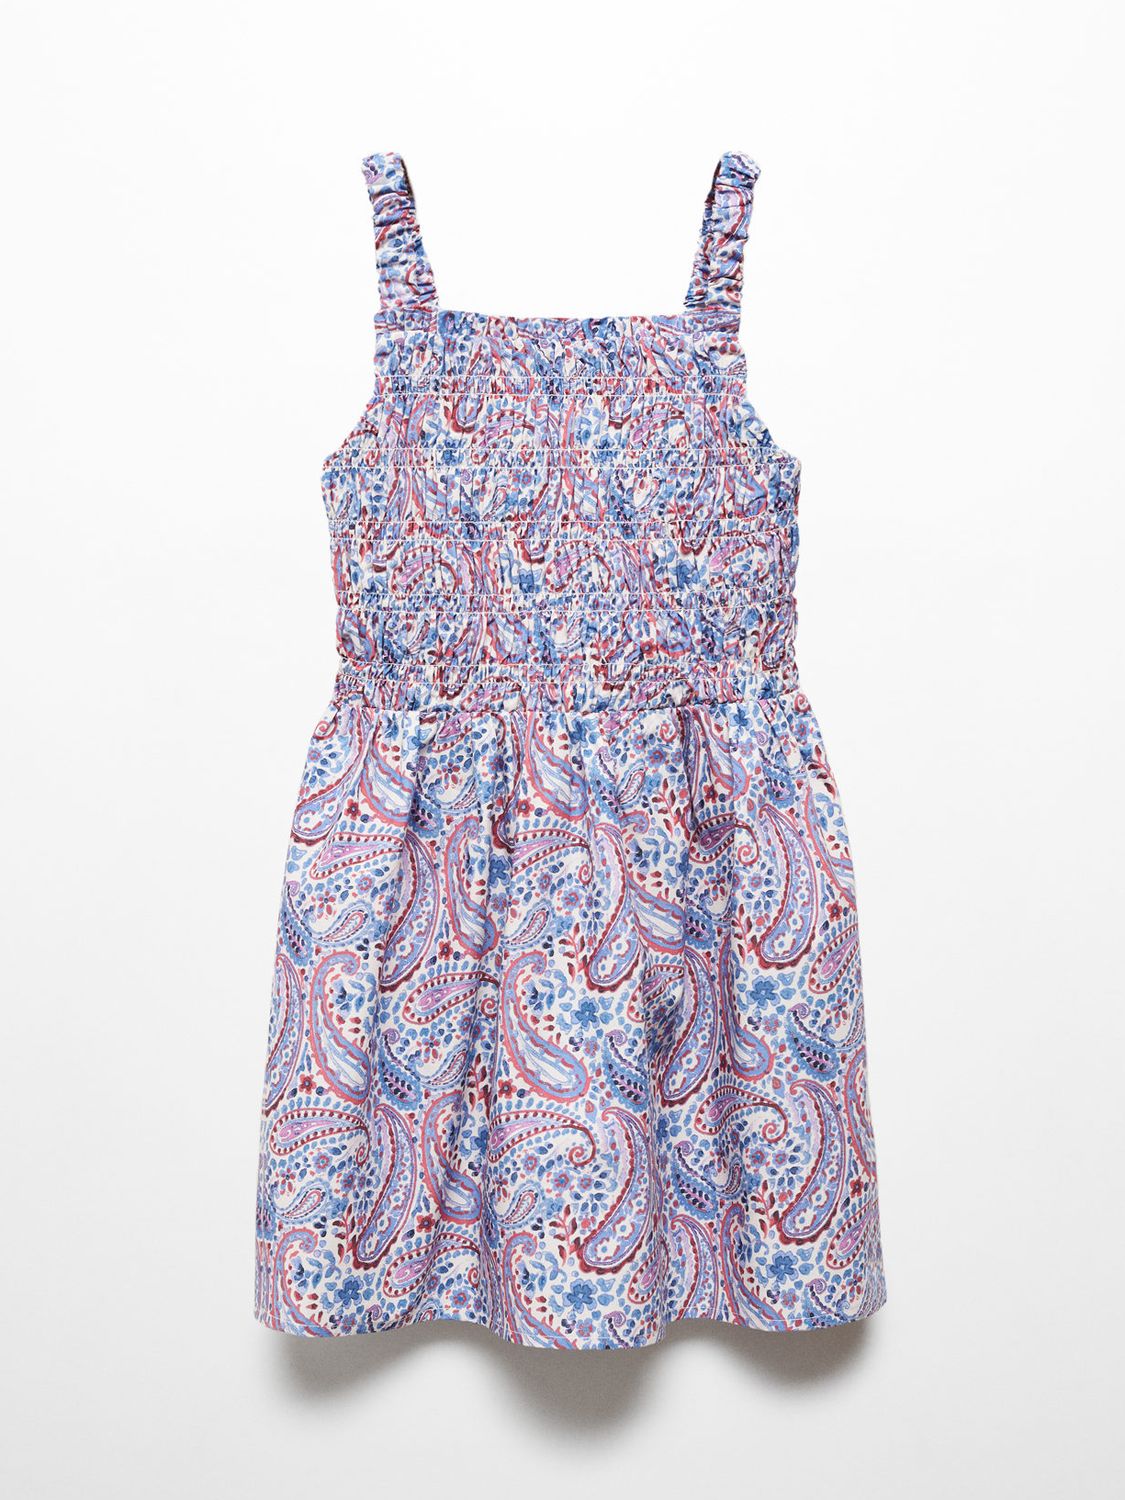 Mango Kids' Emily Paisley Print Ruched Dress, Medium Blue/Multi, 10 years